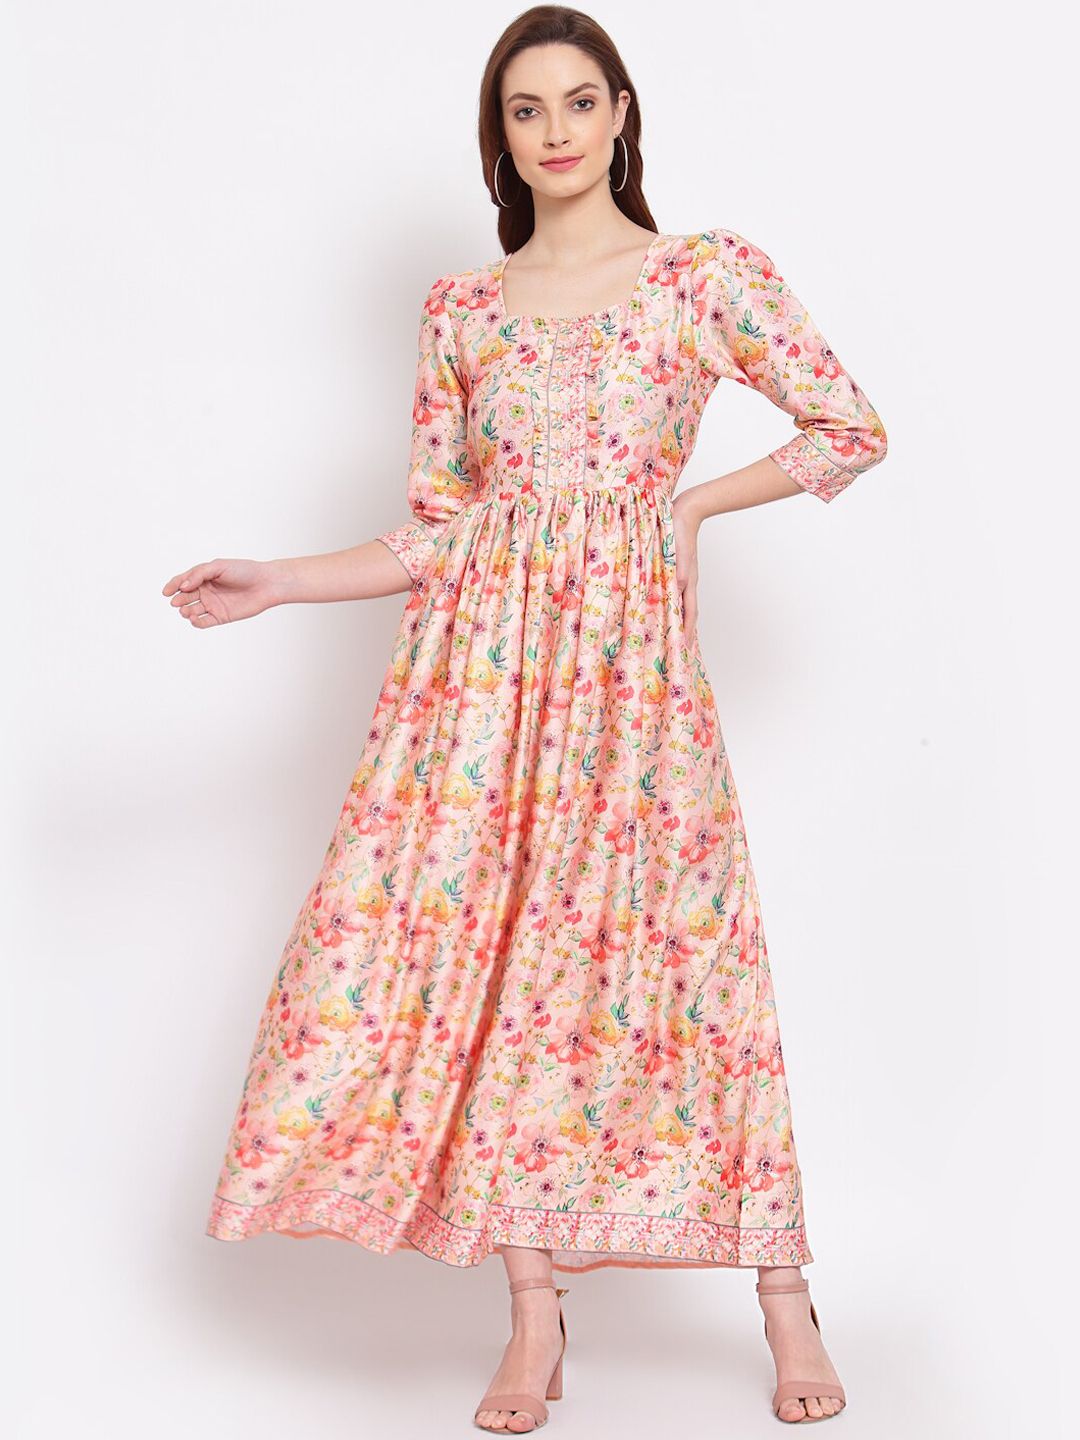 Myshka Peach-Coloured & Yellow Floral Maxi Dress Price in India